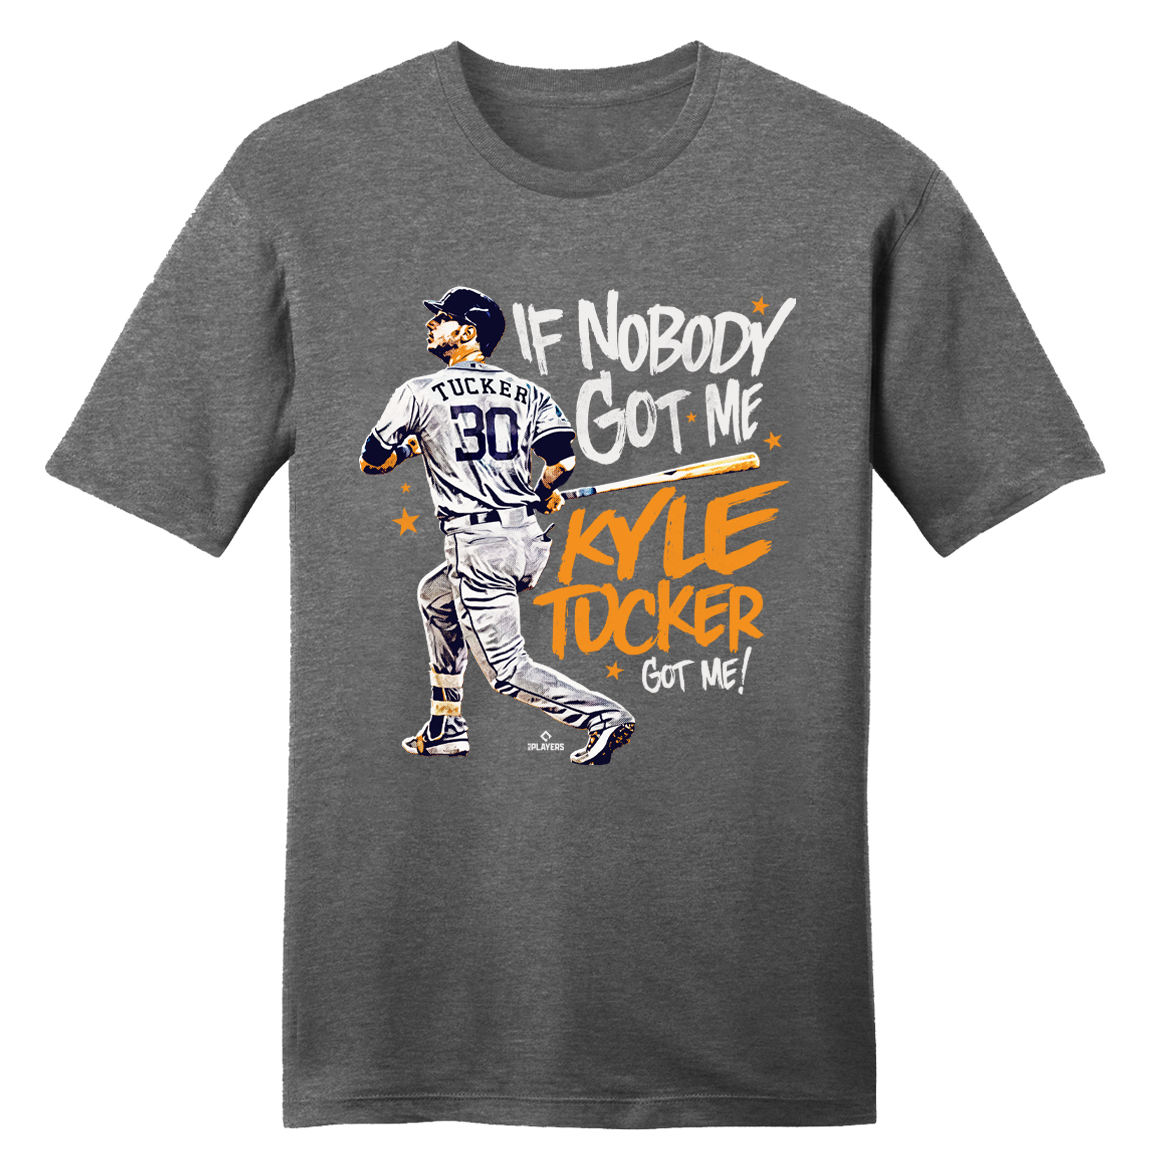  Kyle Tucker Shirt (Cotton, Small, Heather Gray) - Kyle